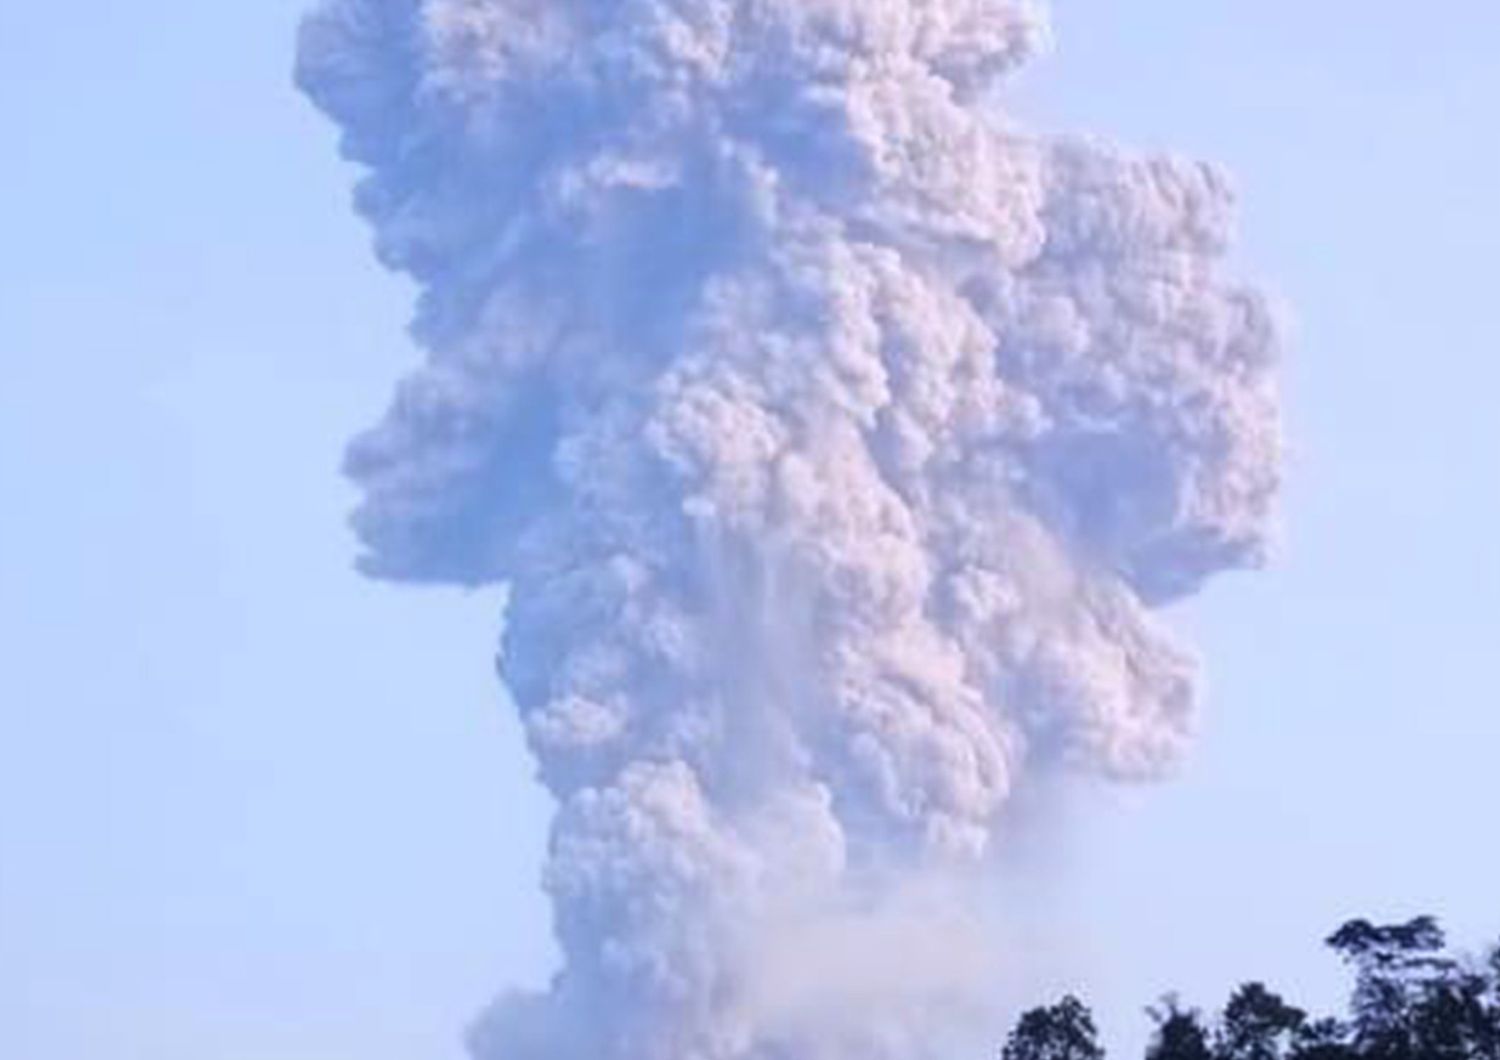 &nbsp;L'eruzione del vulcano Monte Merapi, in Indonesia